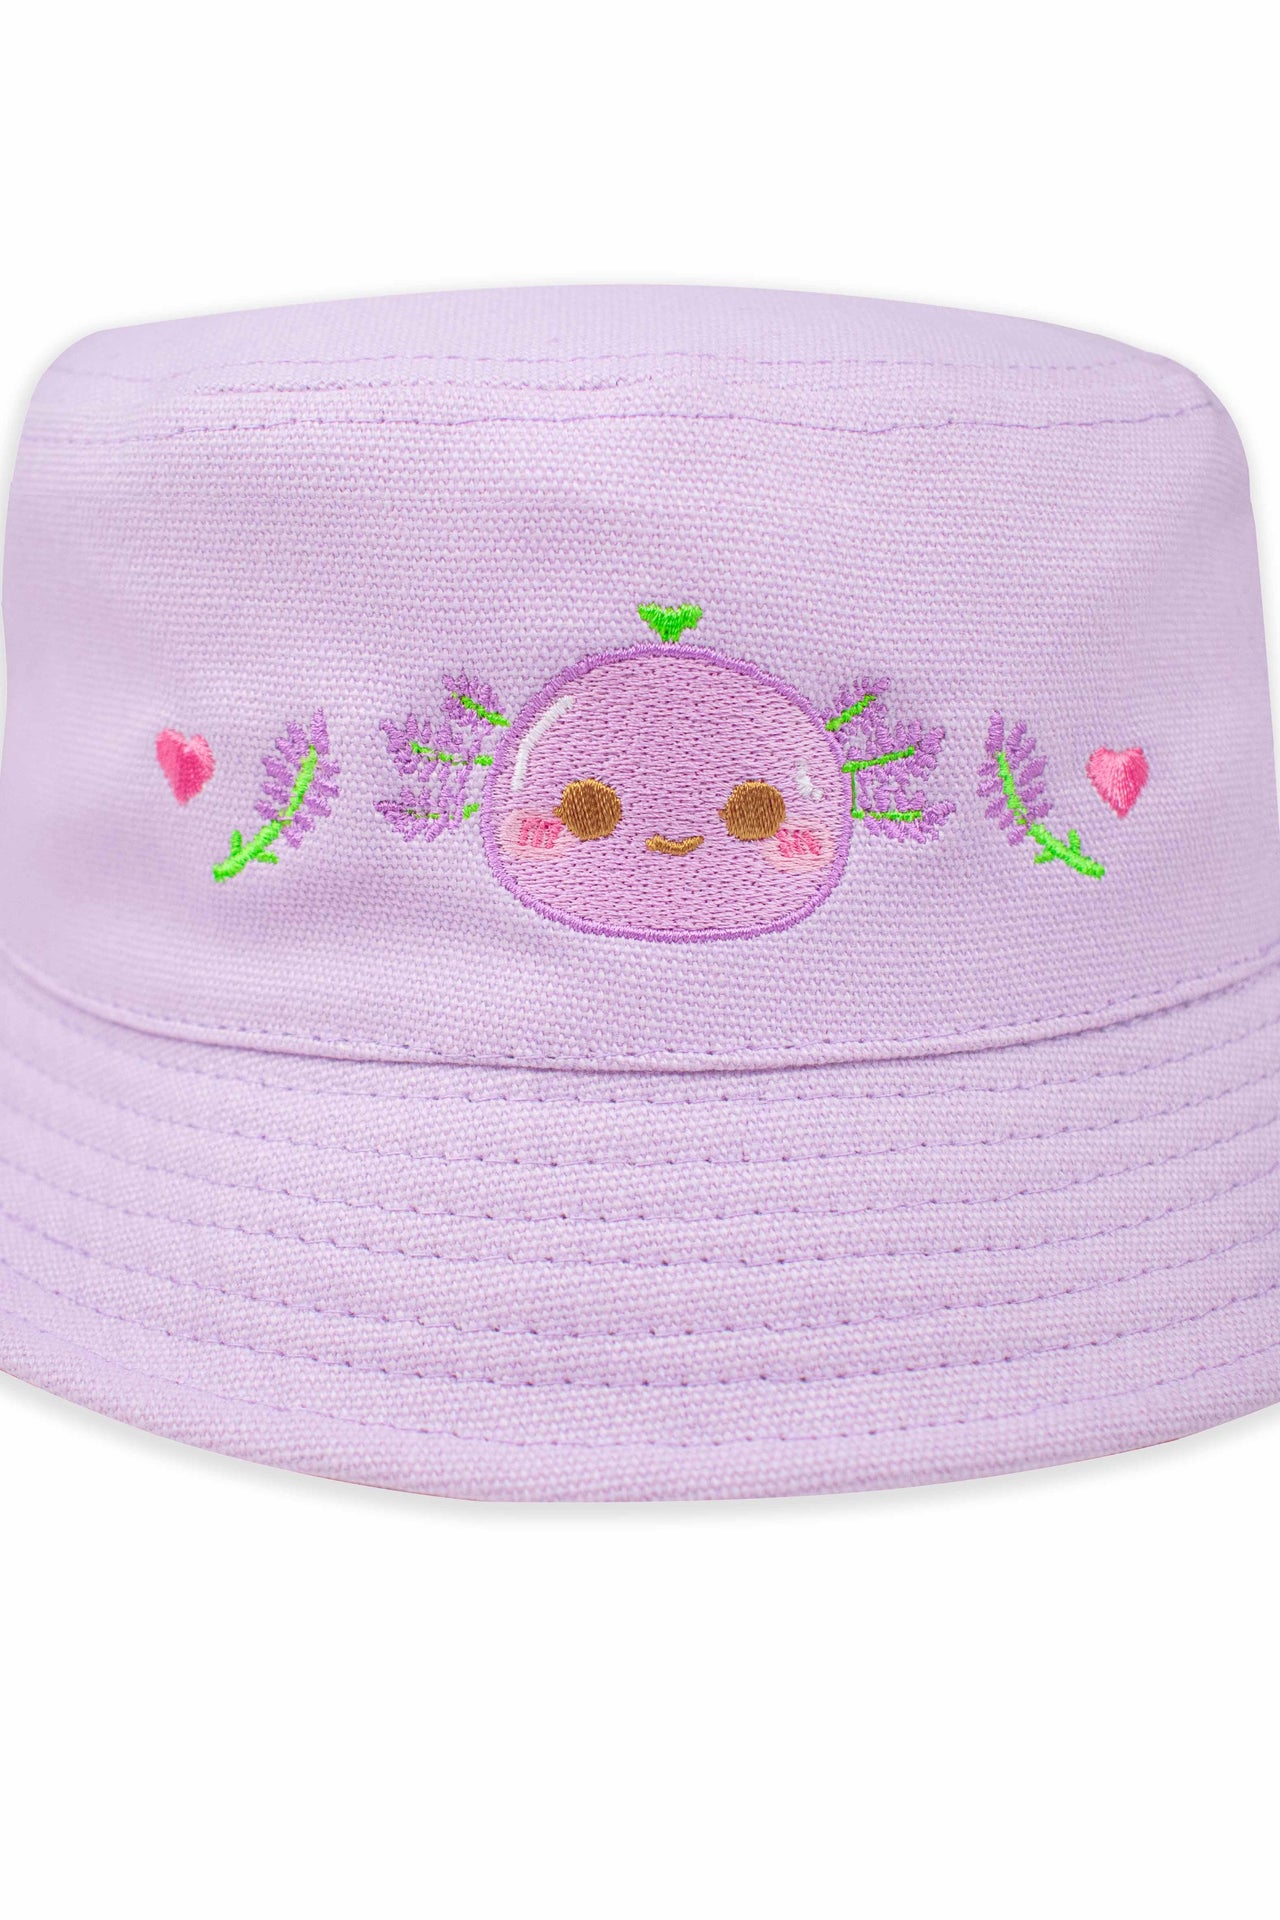 Xoxi Lavender Axolotl Embroidered Bucket Hat - Momokakkoii